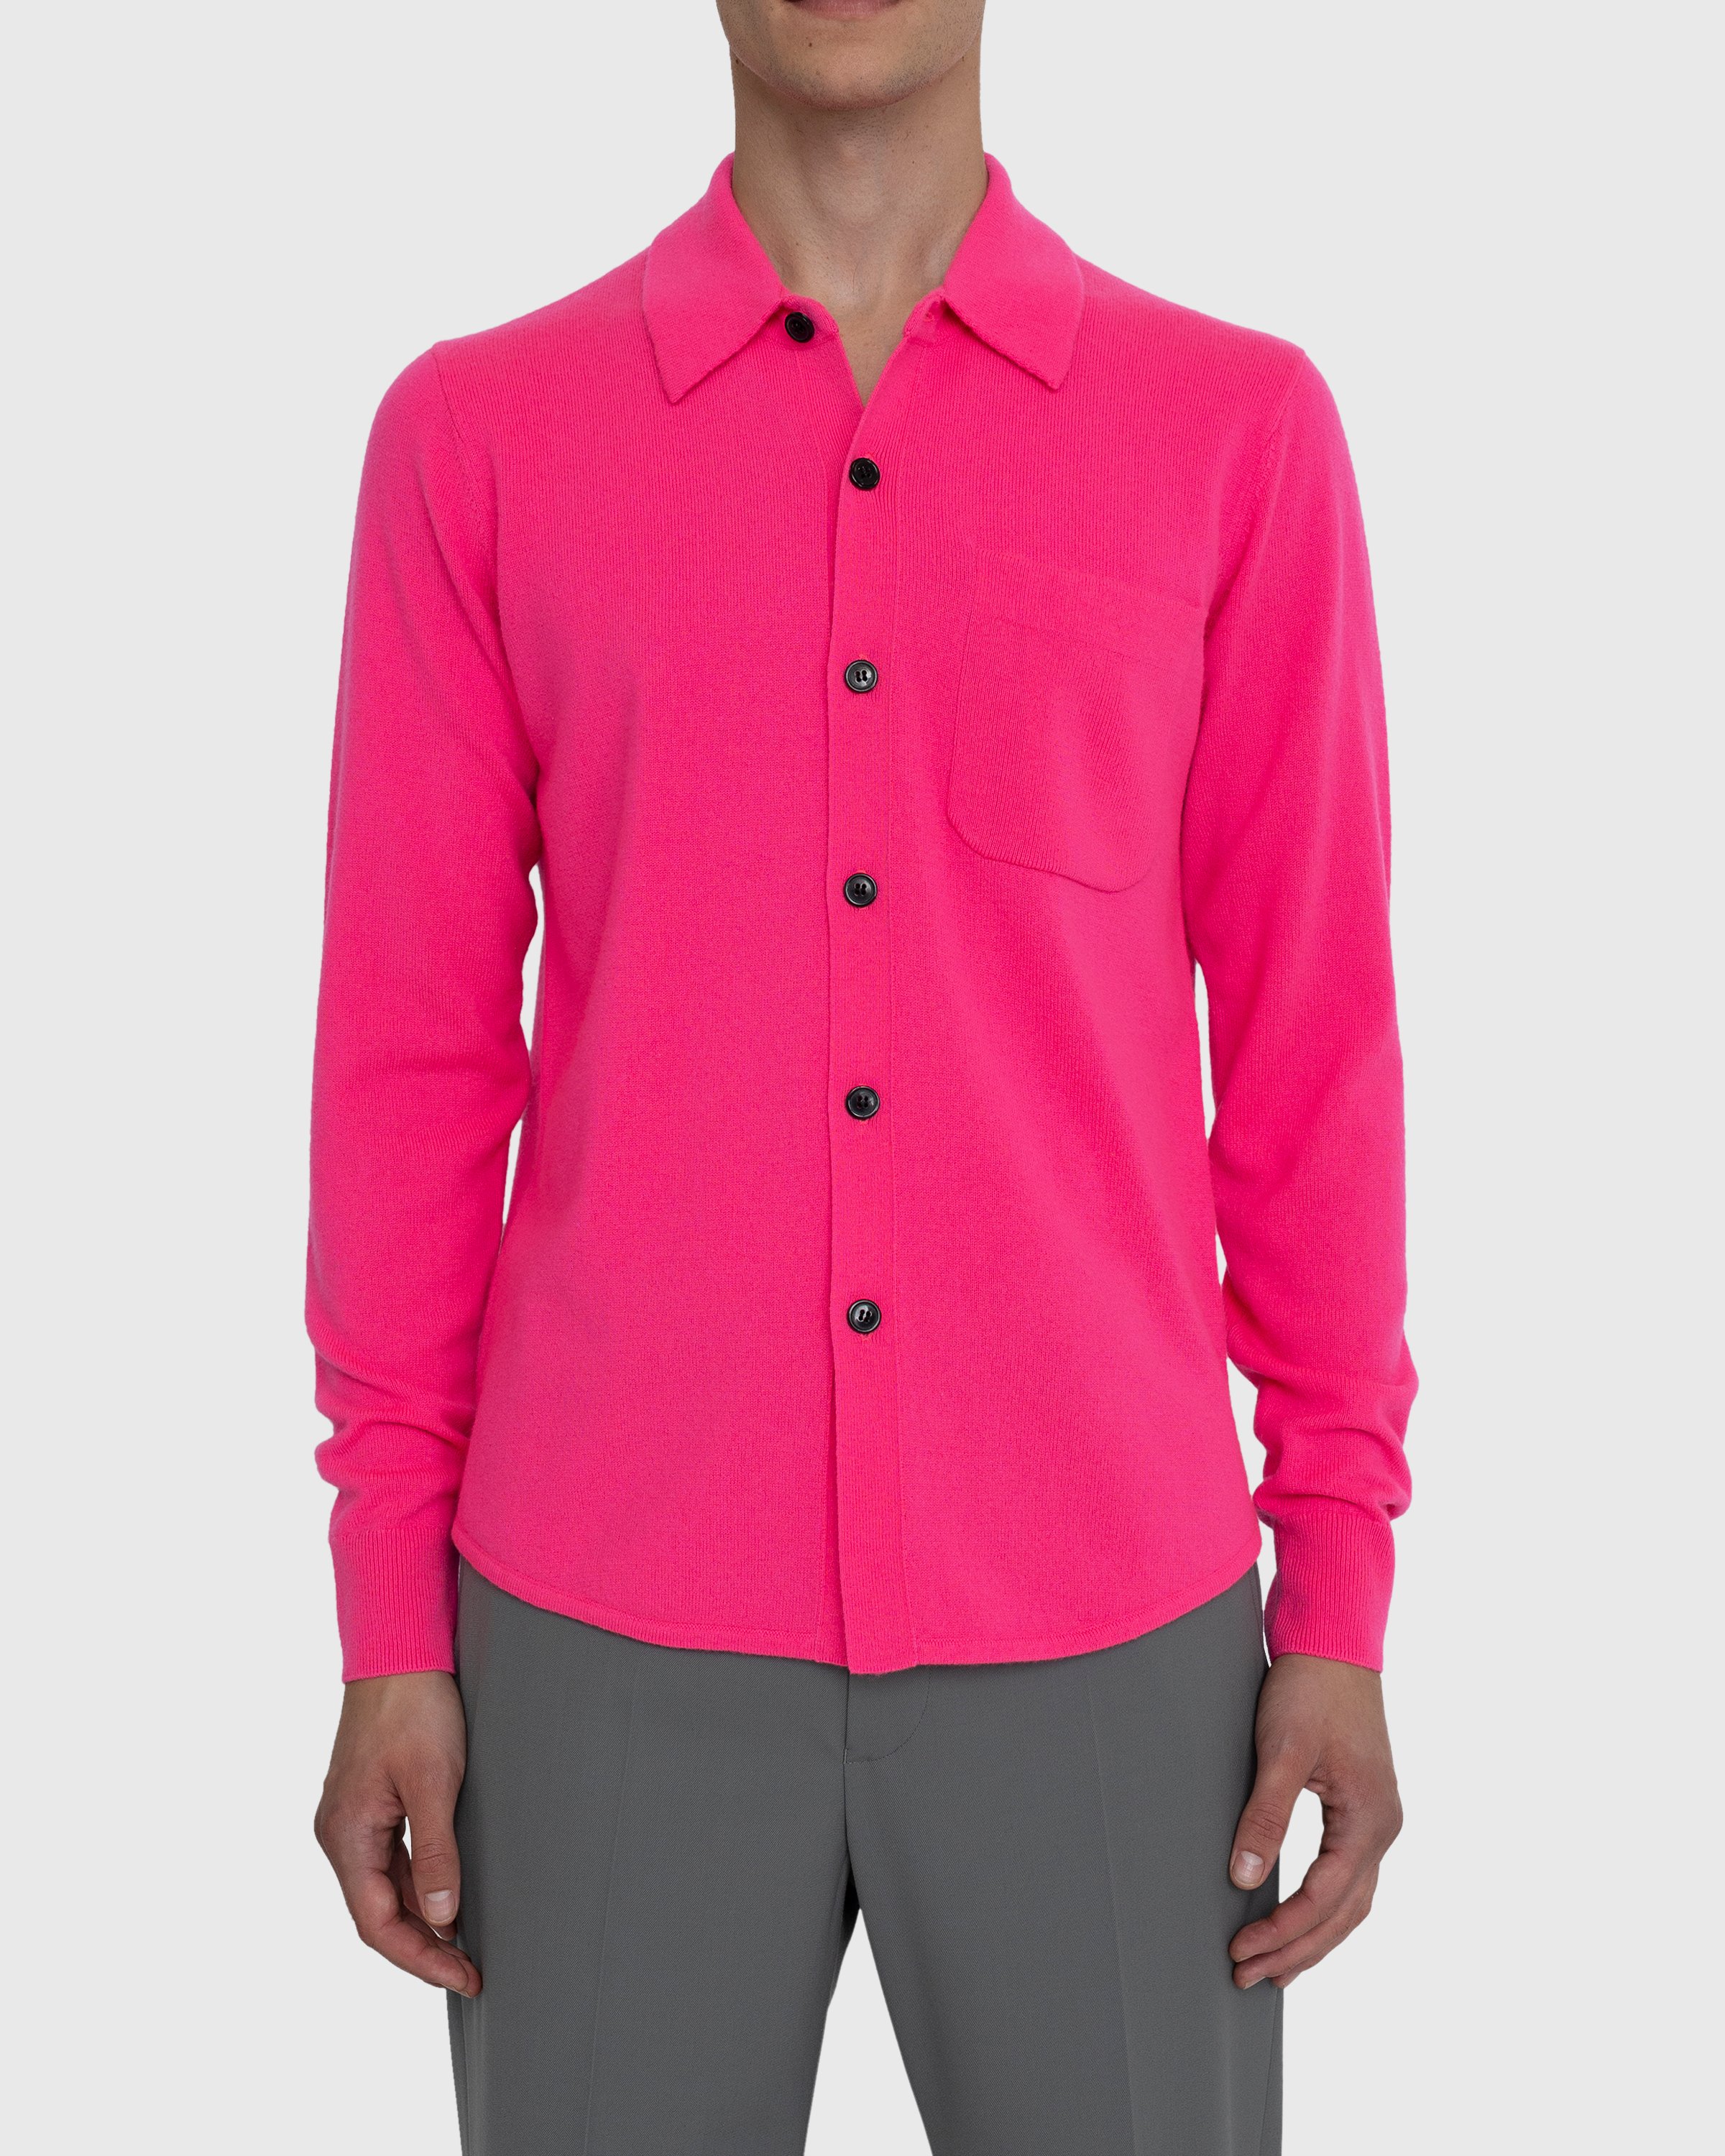 Dries van Noten - Never Cardigan - Clothing - Pink - Image 2